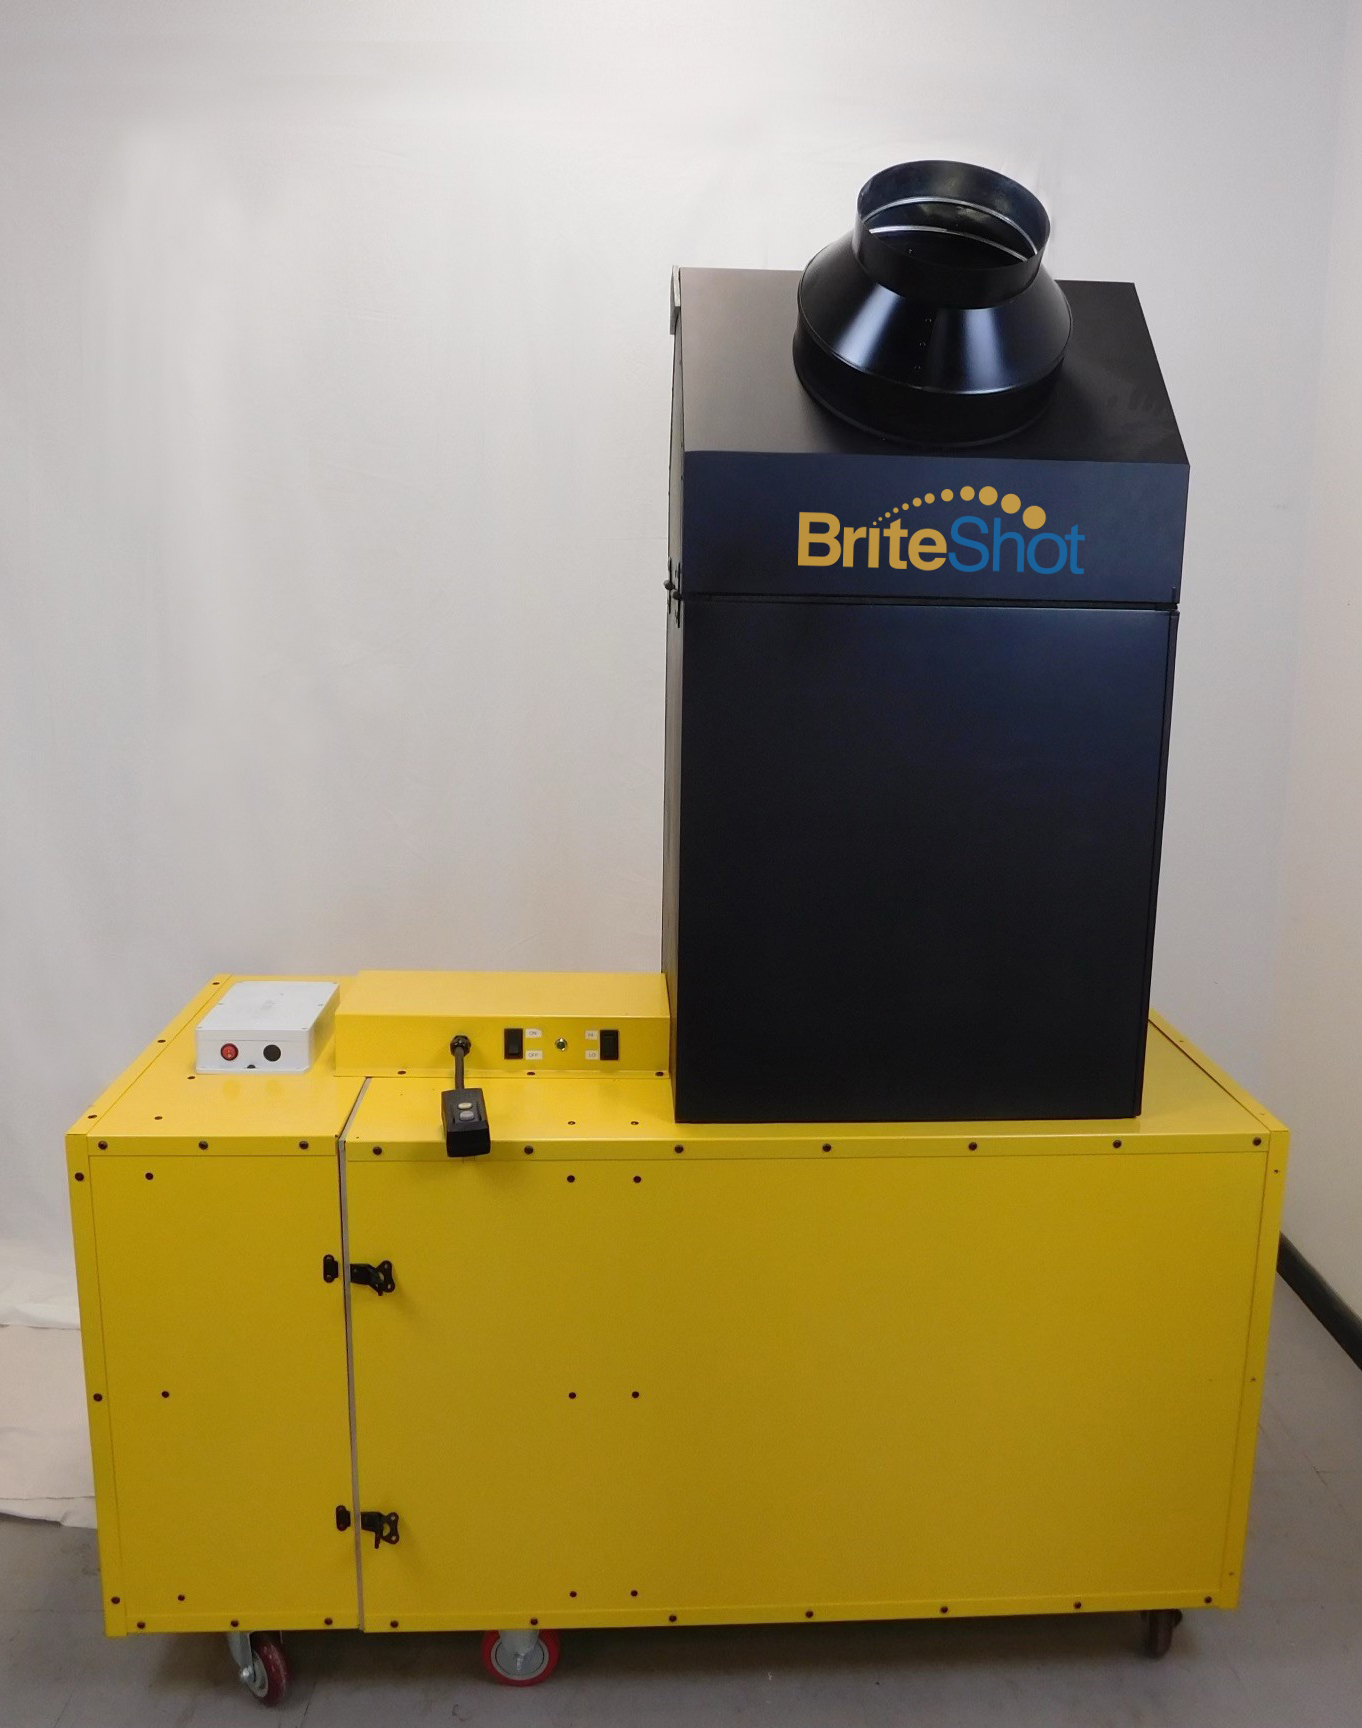 BriteShot’s revolutionary AirAffair air filtration system COVID-19 decontamination solution